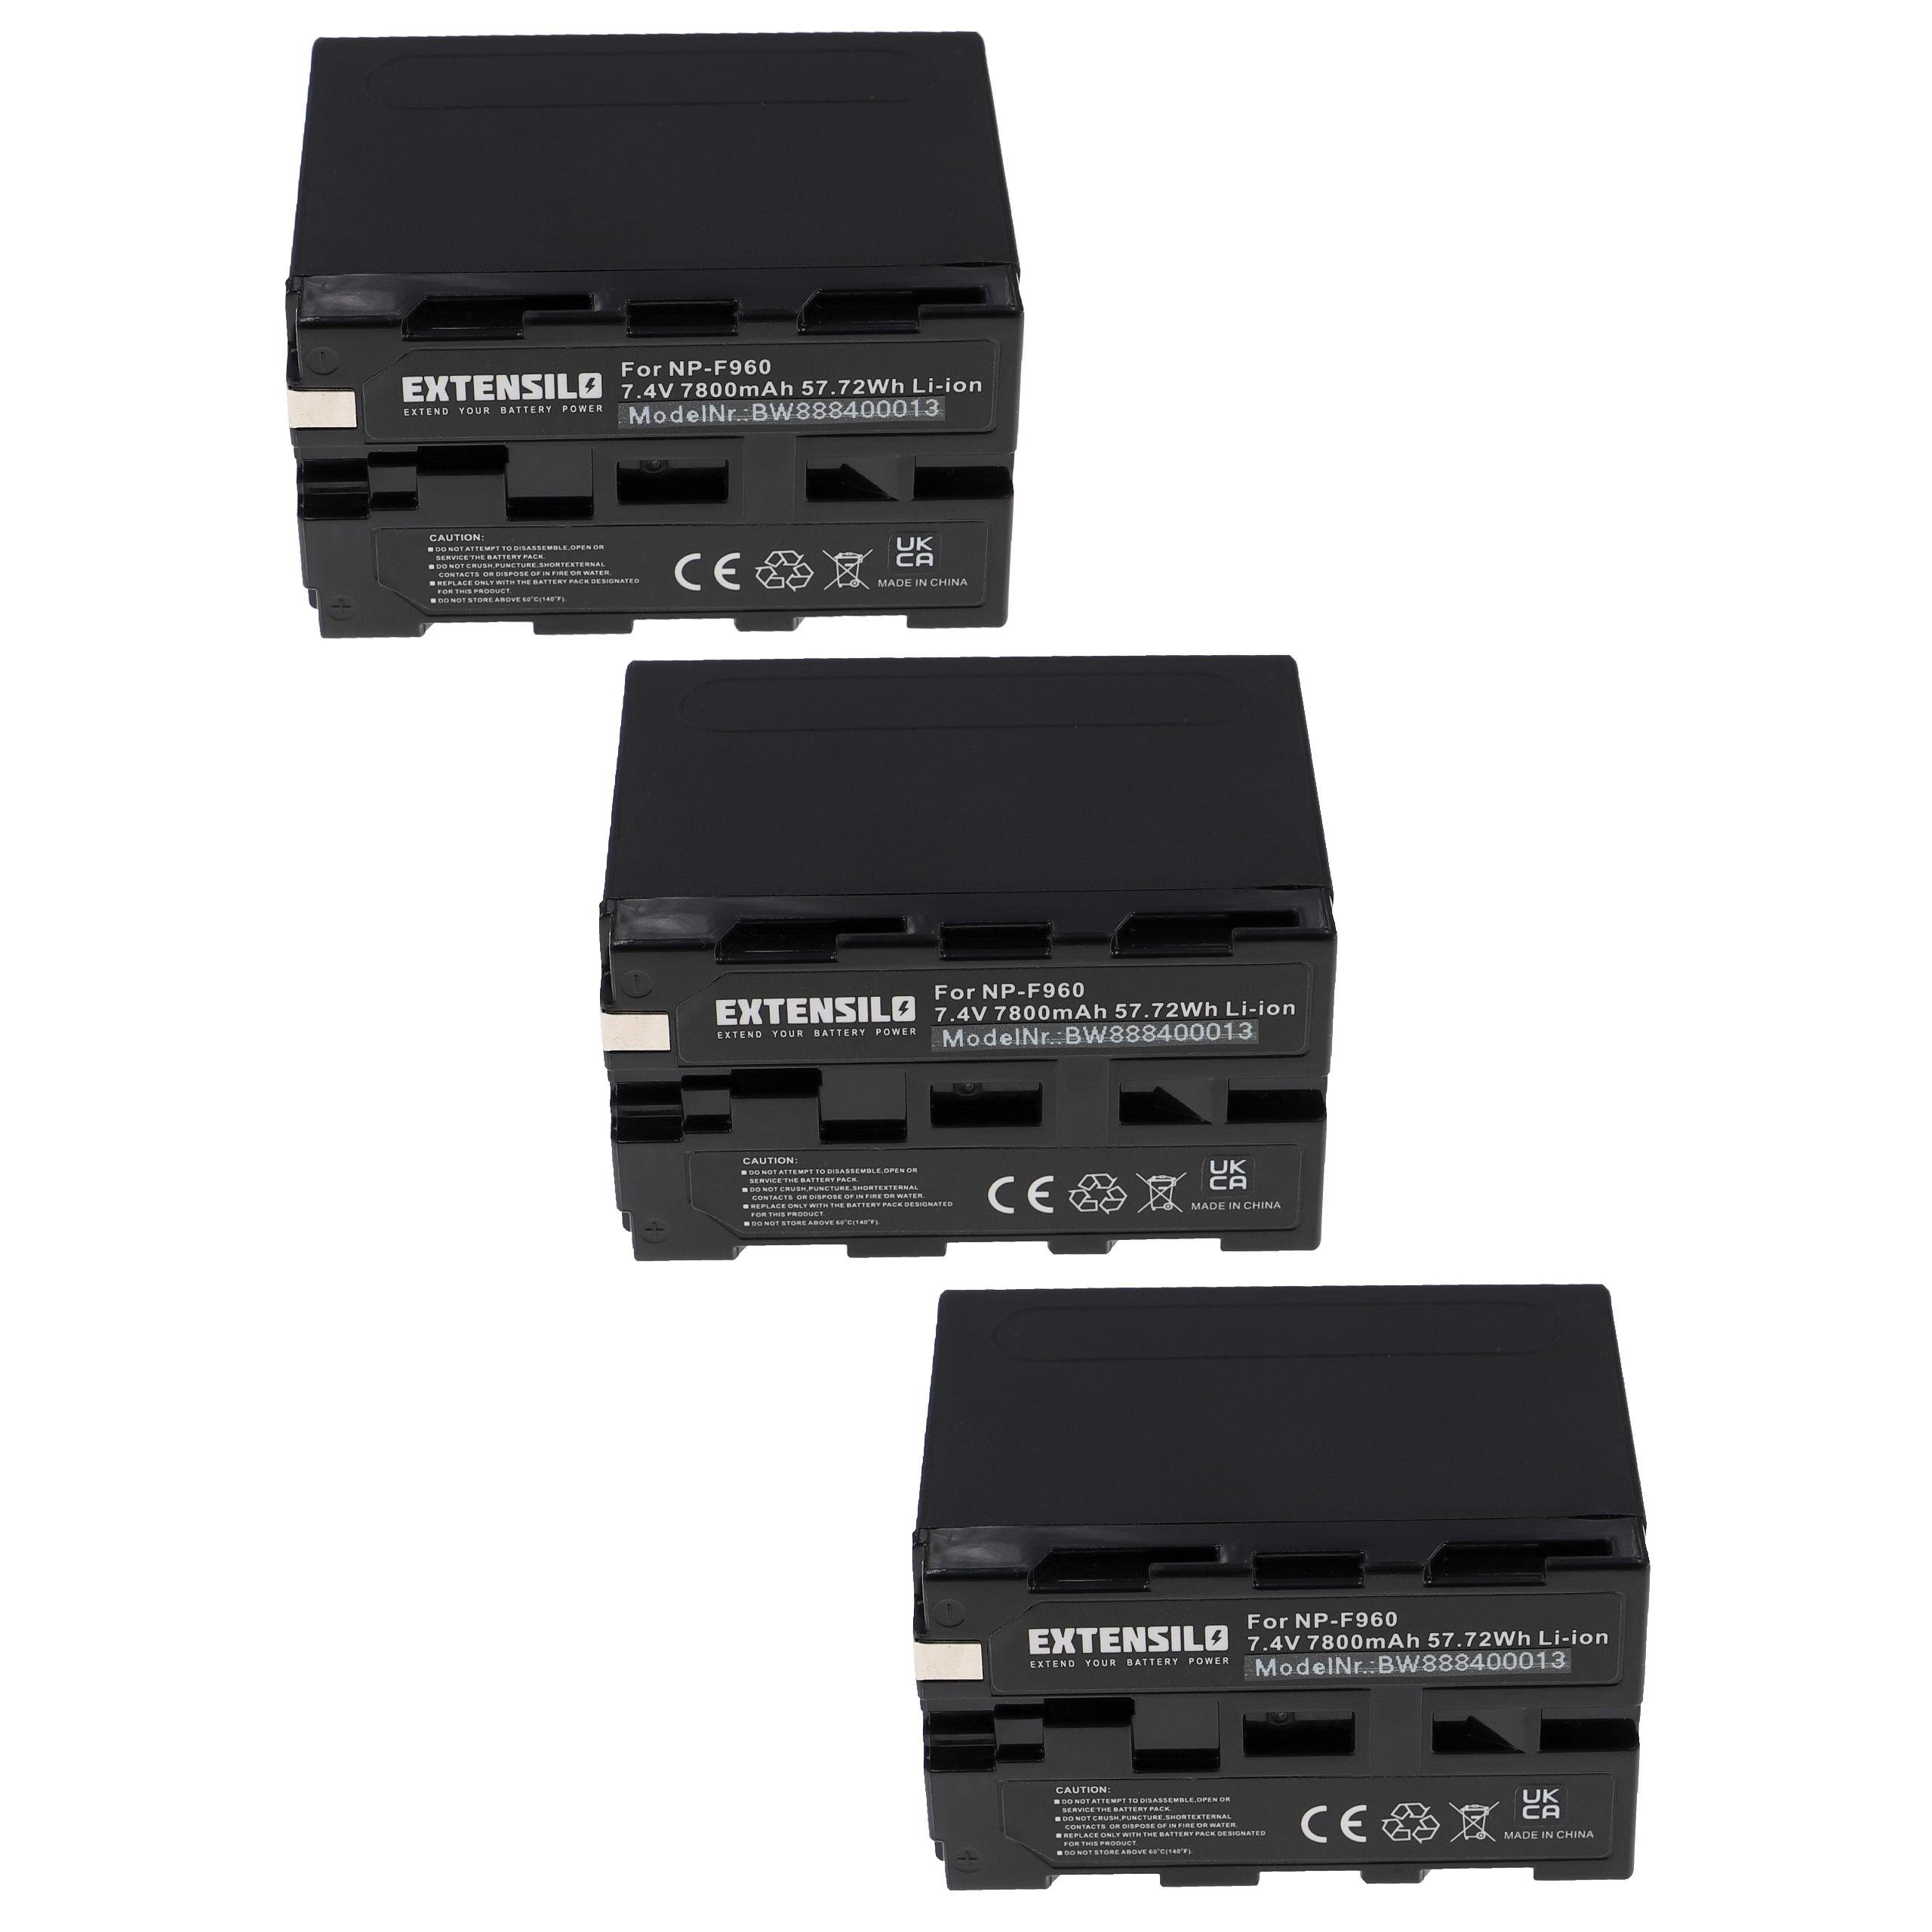 CCD-TRV36, passend Kamera-Akku CCD-TRV35, MiniDV CCD-TRV3000, mAh 7800 für Sony Extensilo CCD-TRV37,